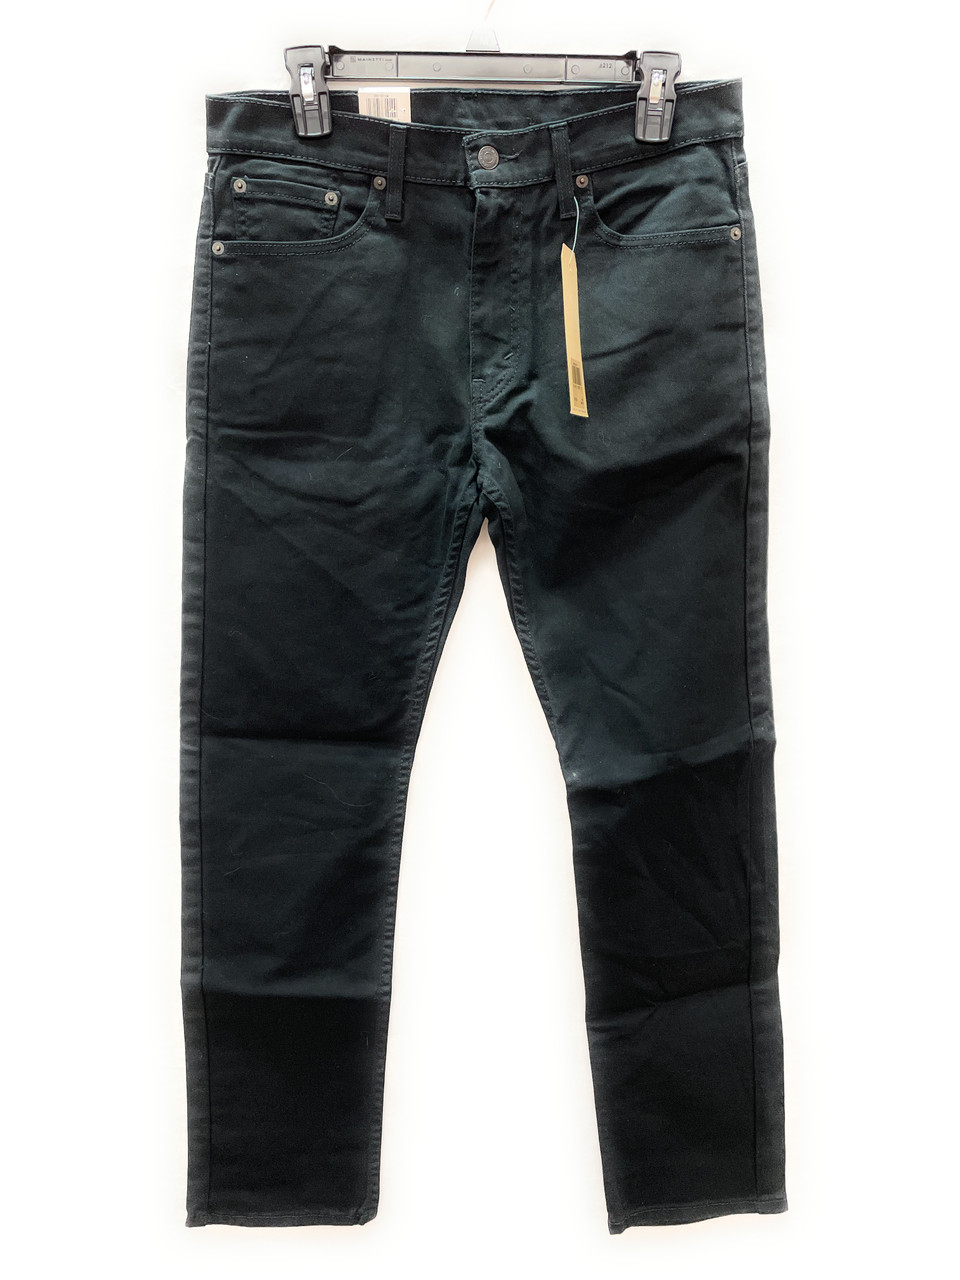 Levi's Men's 513 Stretch Slim Straight Jean, Jet, 31x32 - Discount Scrubs  and Fashion